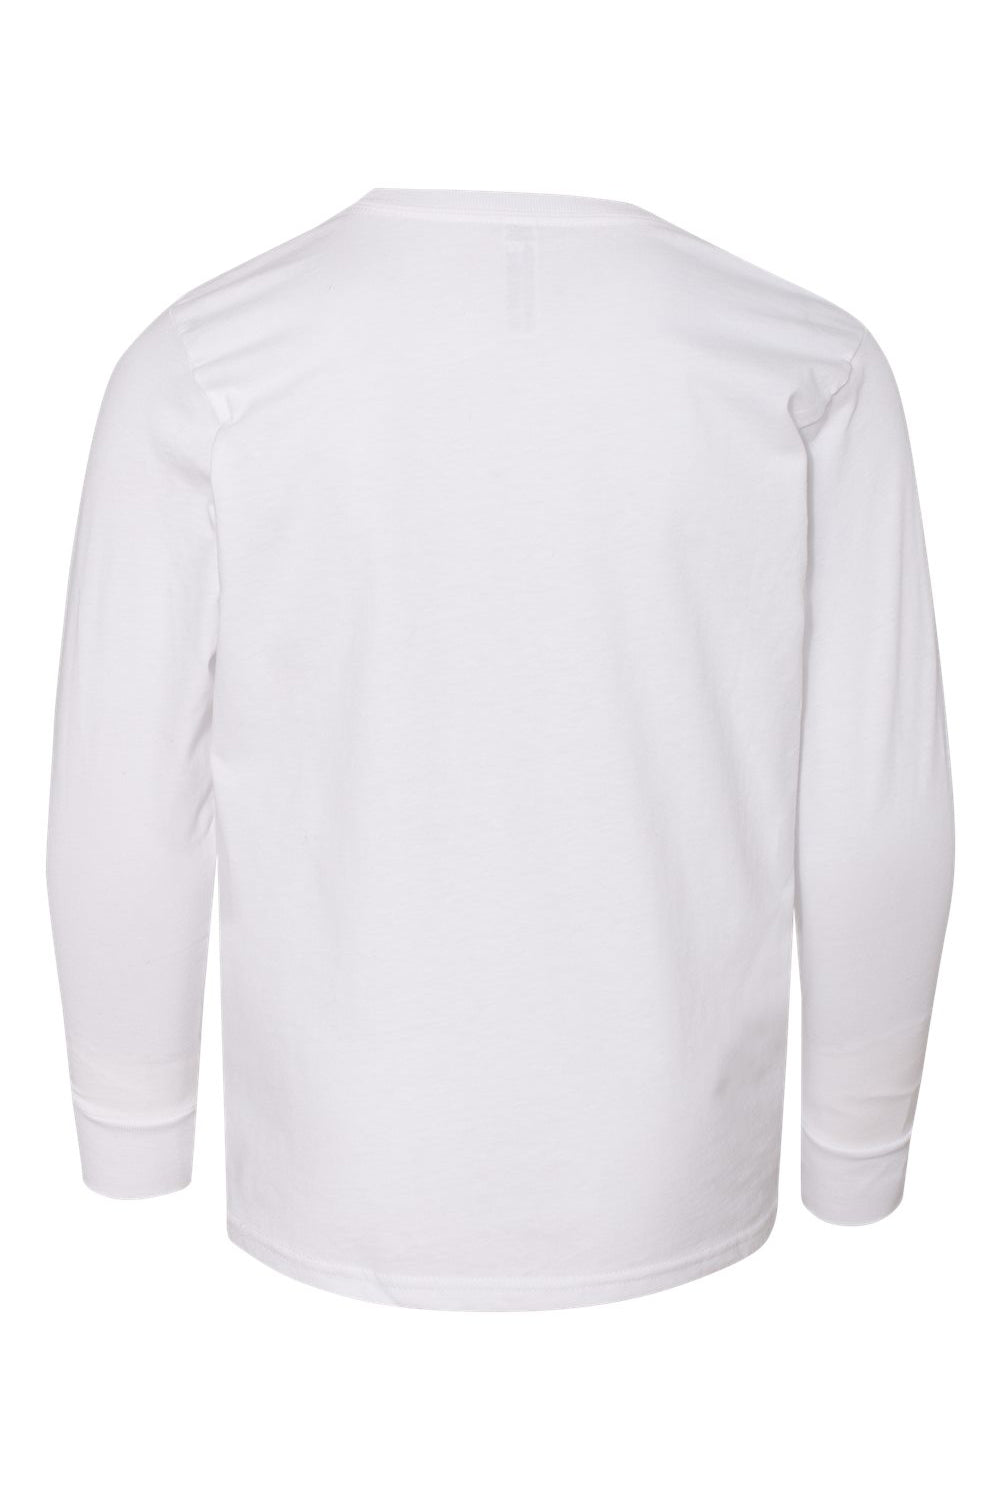 LAT 6201 Youth Fine Jersey Long Sleeve Crewneck T-Shirt White Flat Back